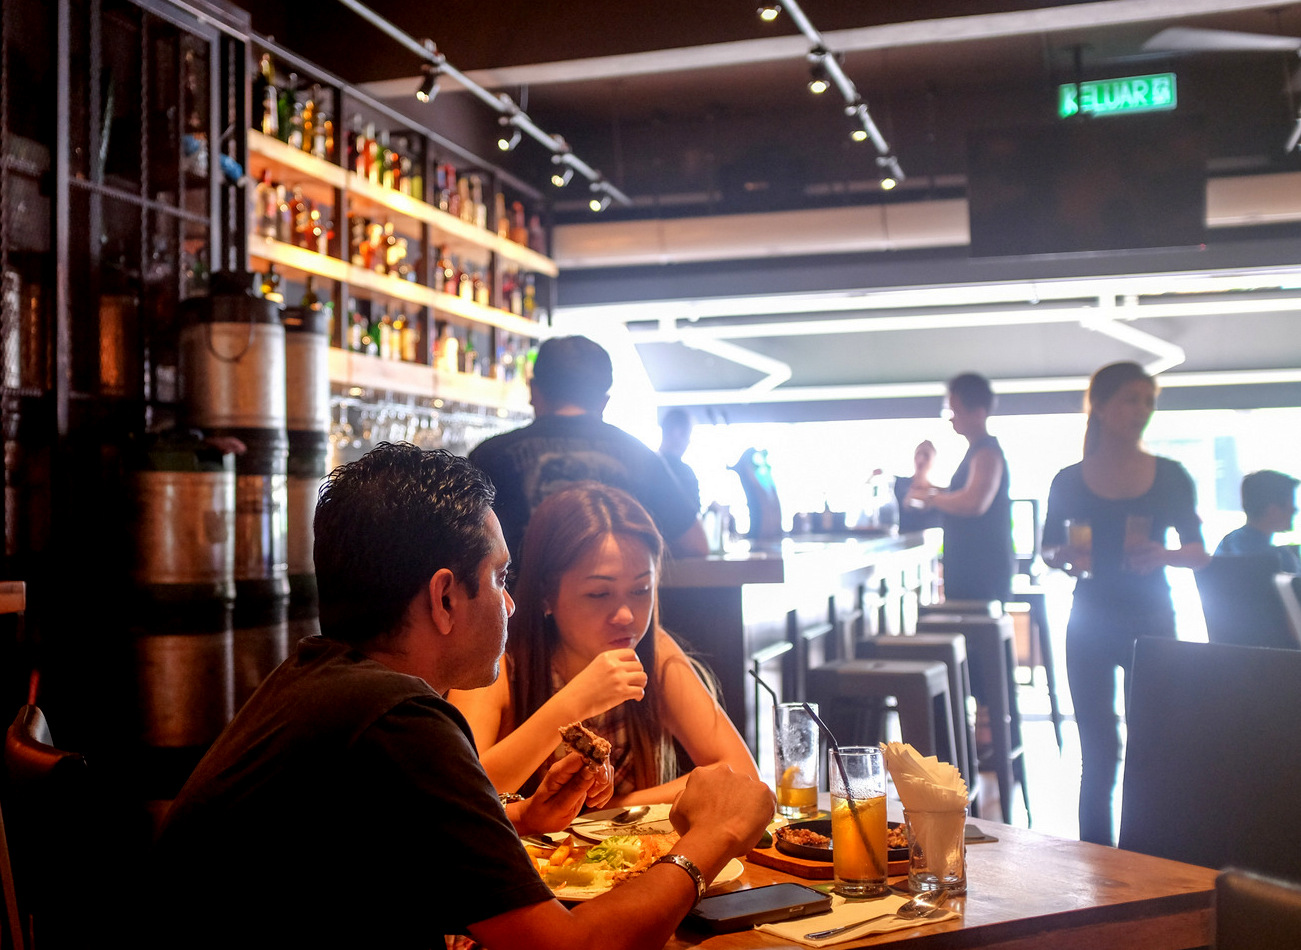 Uncle Don's at SS2 Petaling Jaya: Restaurant review - EatDrink